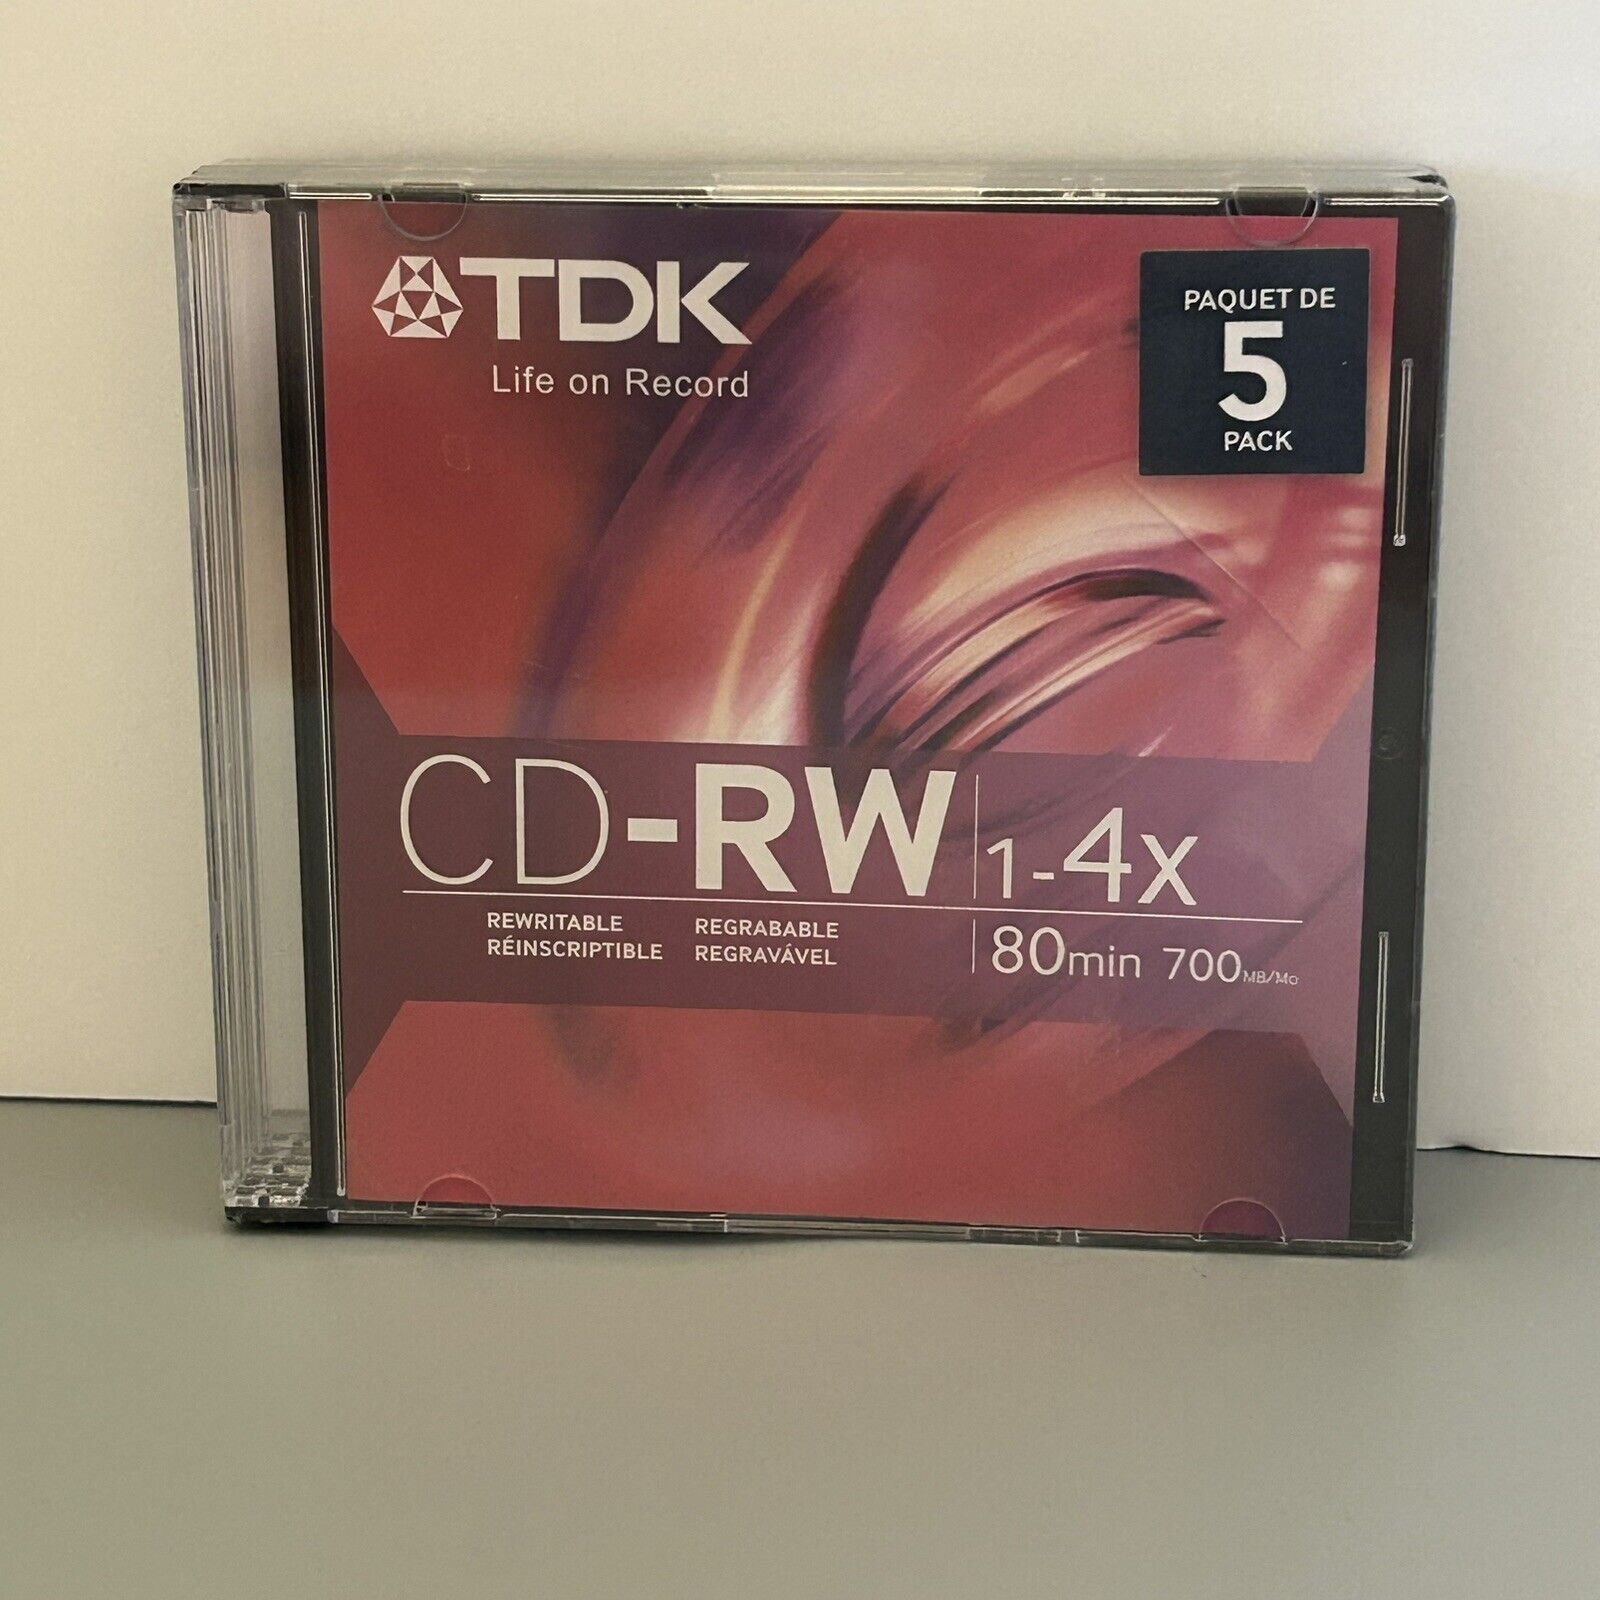 TDK CD-RW Rewritable Data CD's 1x-4x, 700MB 80 min 5 pack Factory Sealed - MUSIC